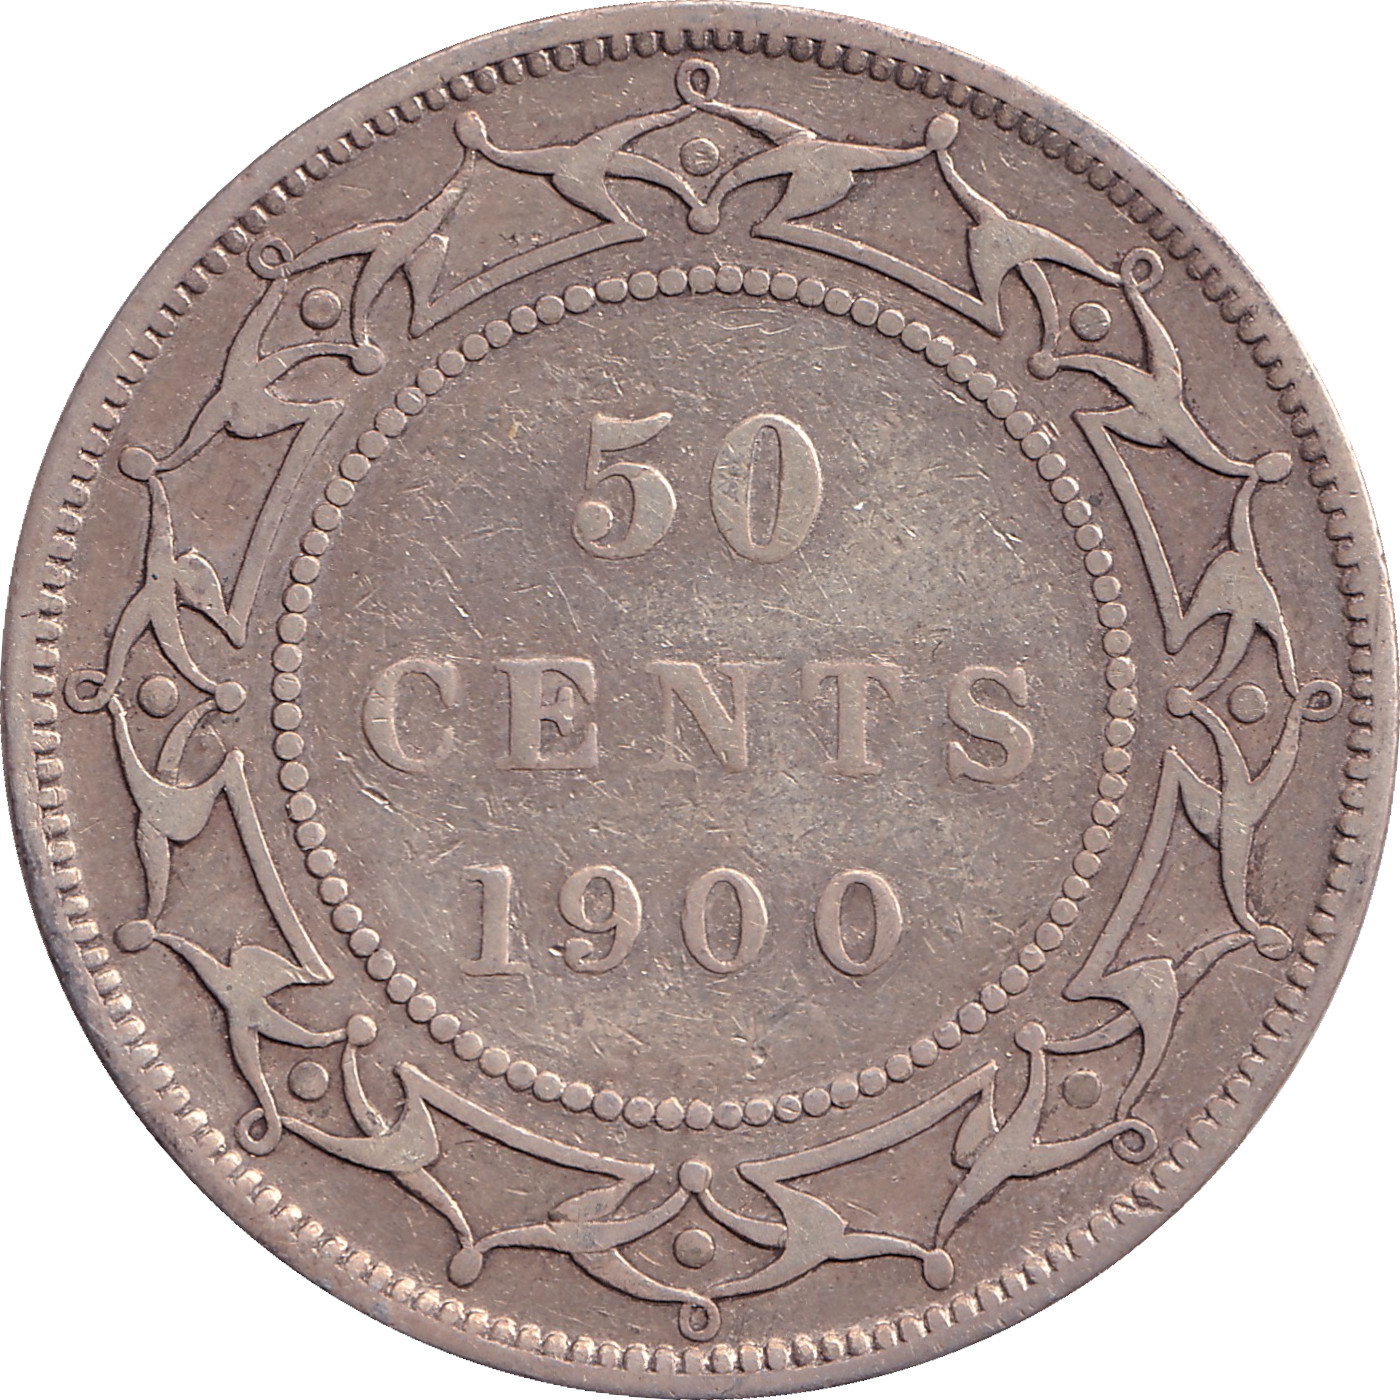 50 cents - Victoria